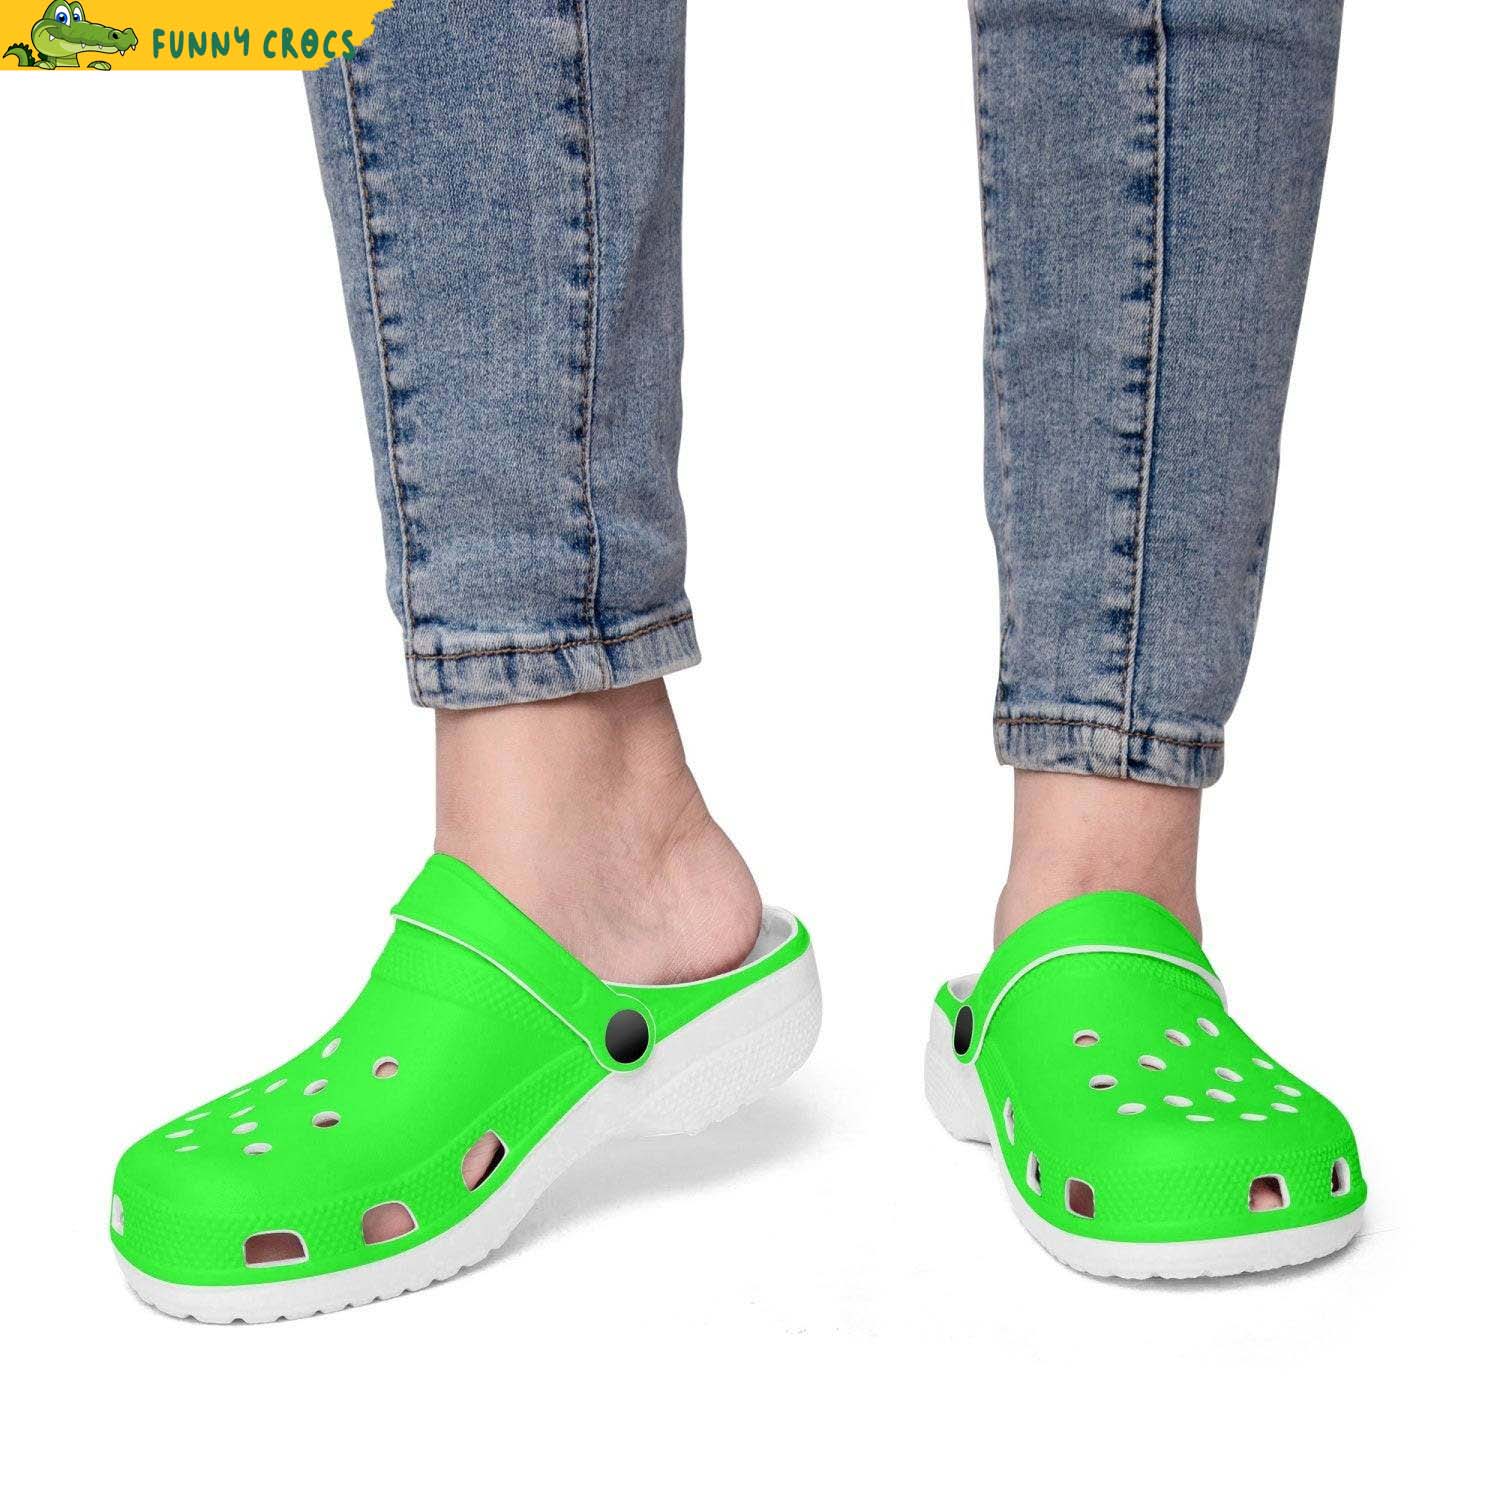 Arrangement Mart prik Lime Green Crocs - Step into style with Funny Crocs